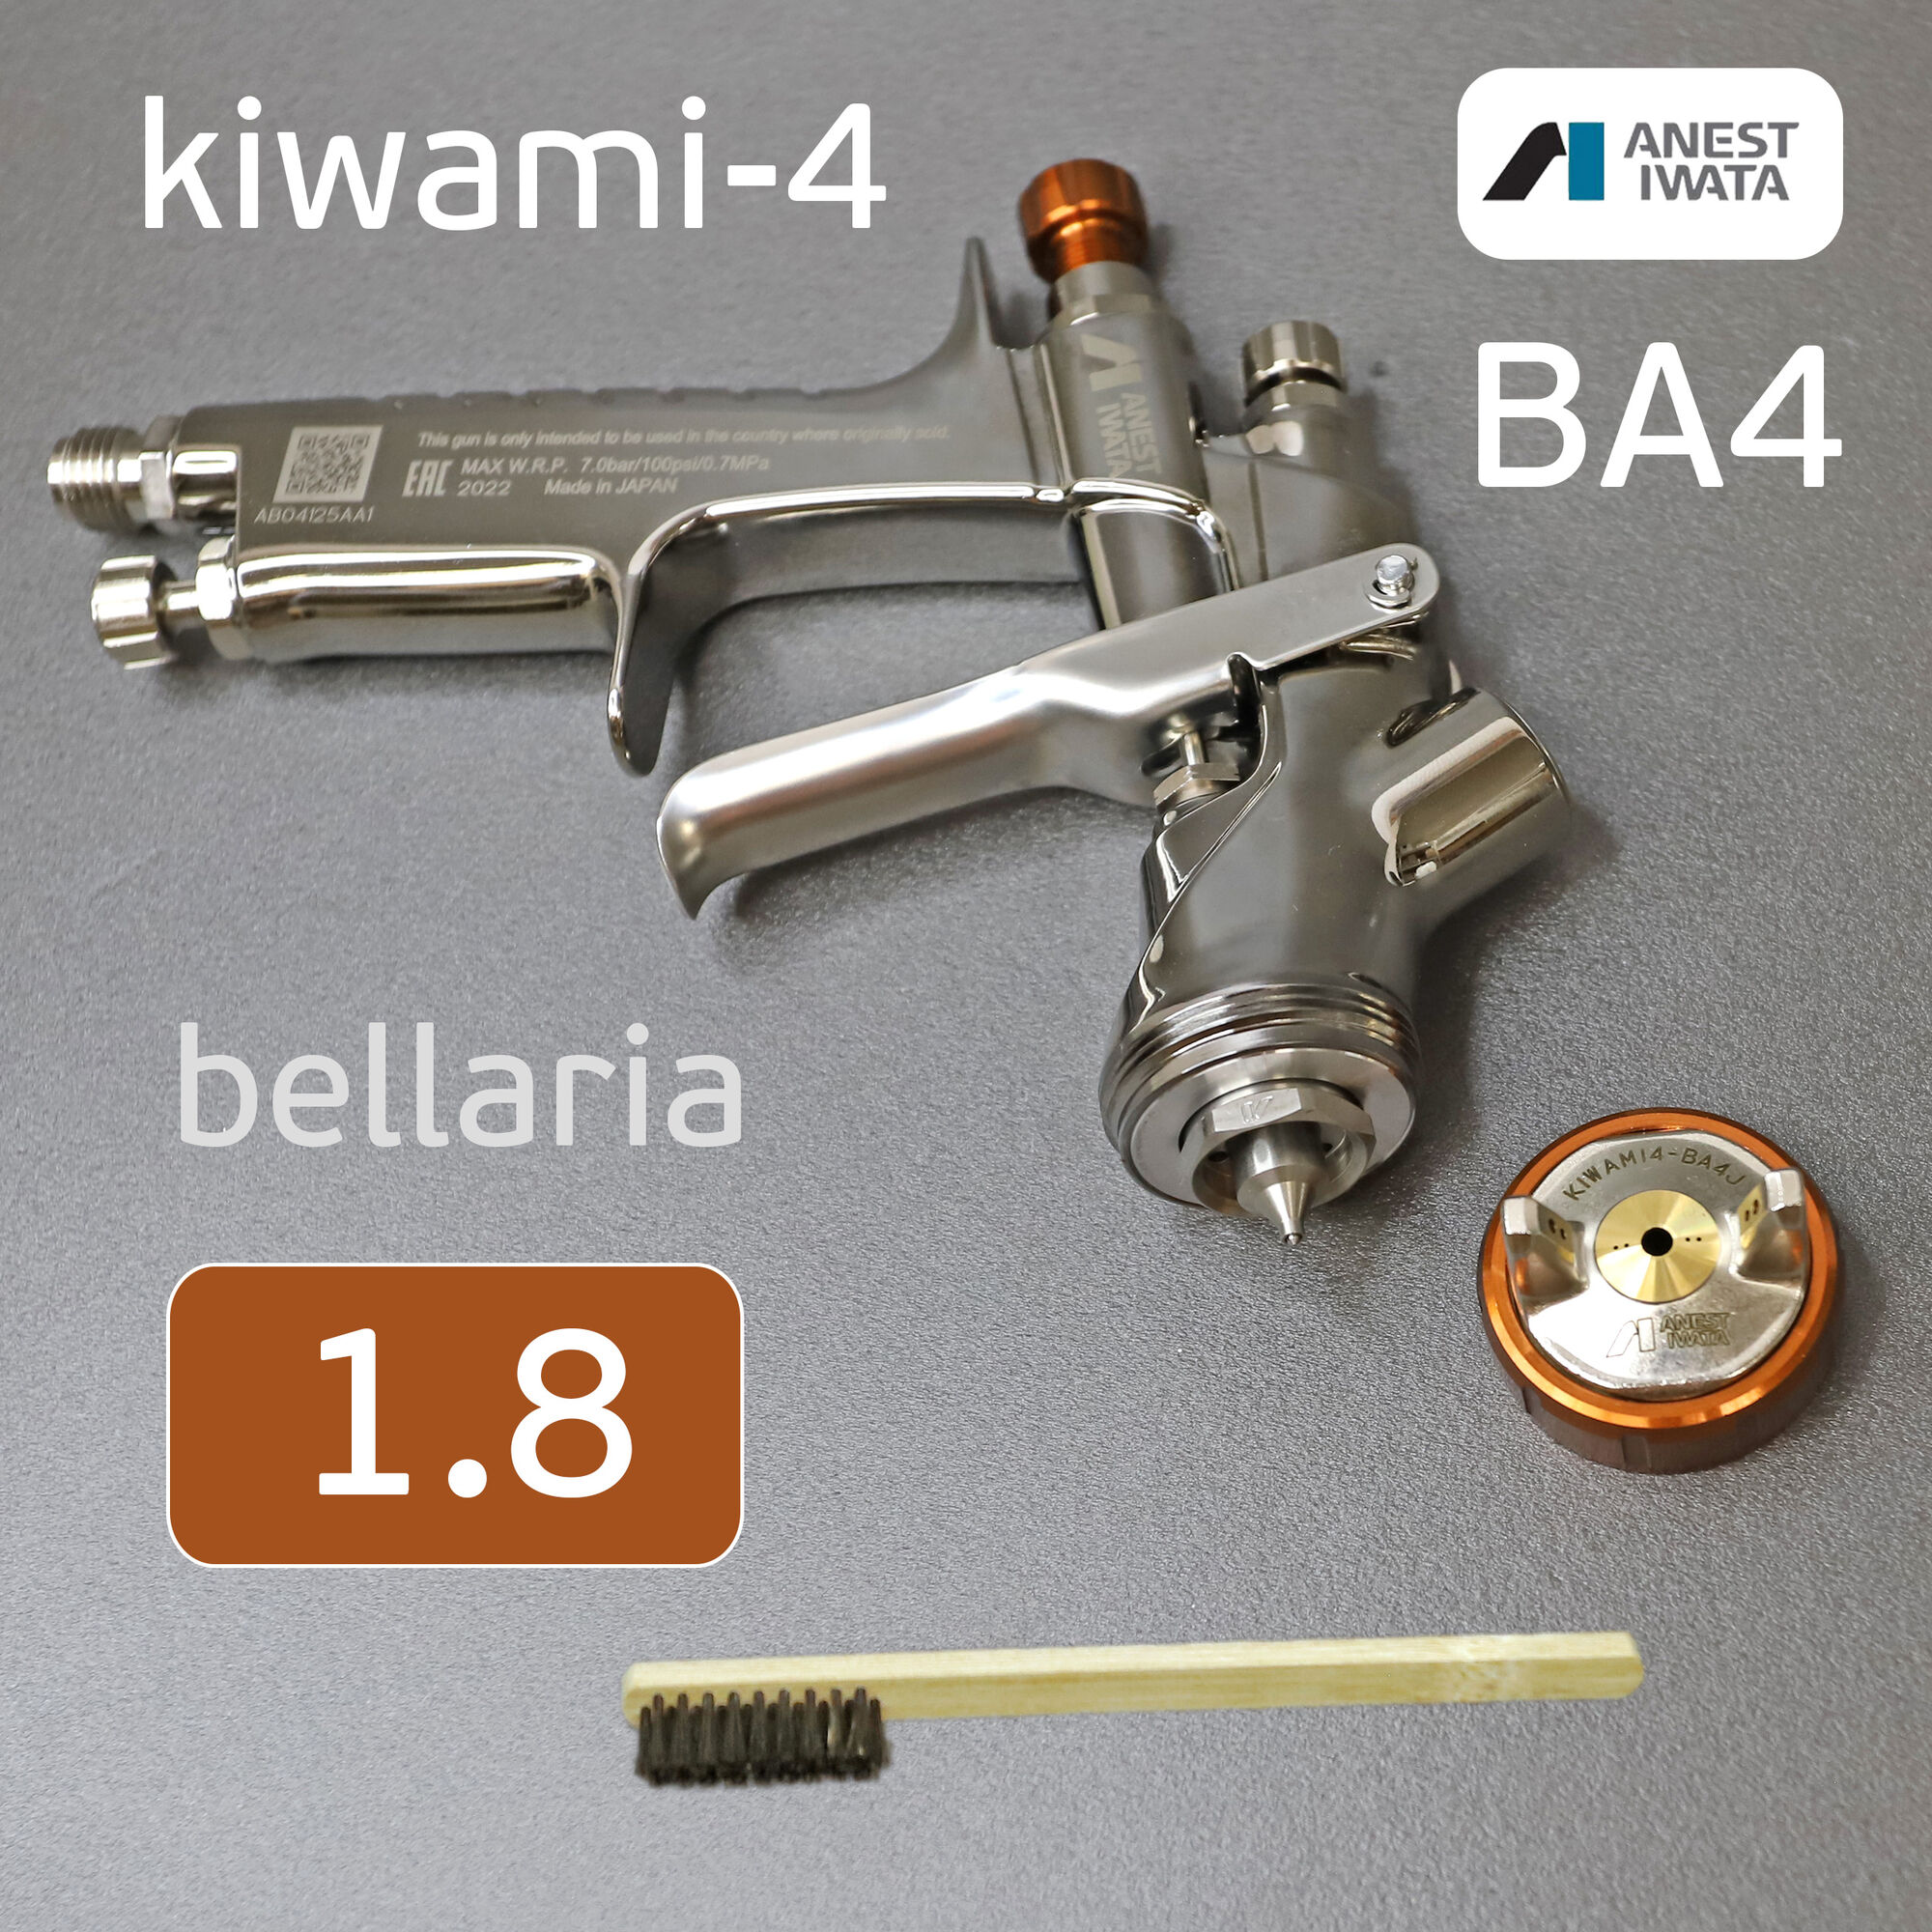 Краскопульт Anest Iwata kiwami BA4 (1.8мм) без бачка NEW W-400 Bellaria 1